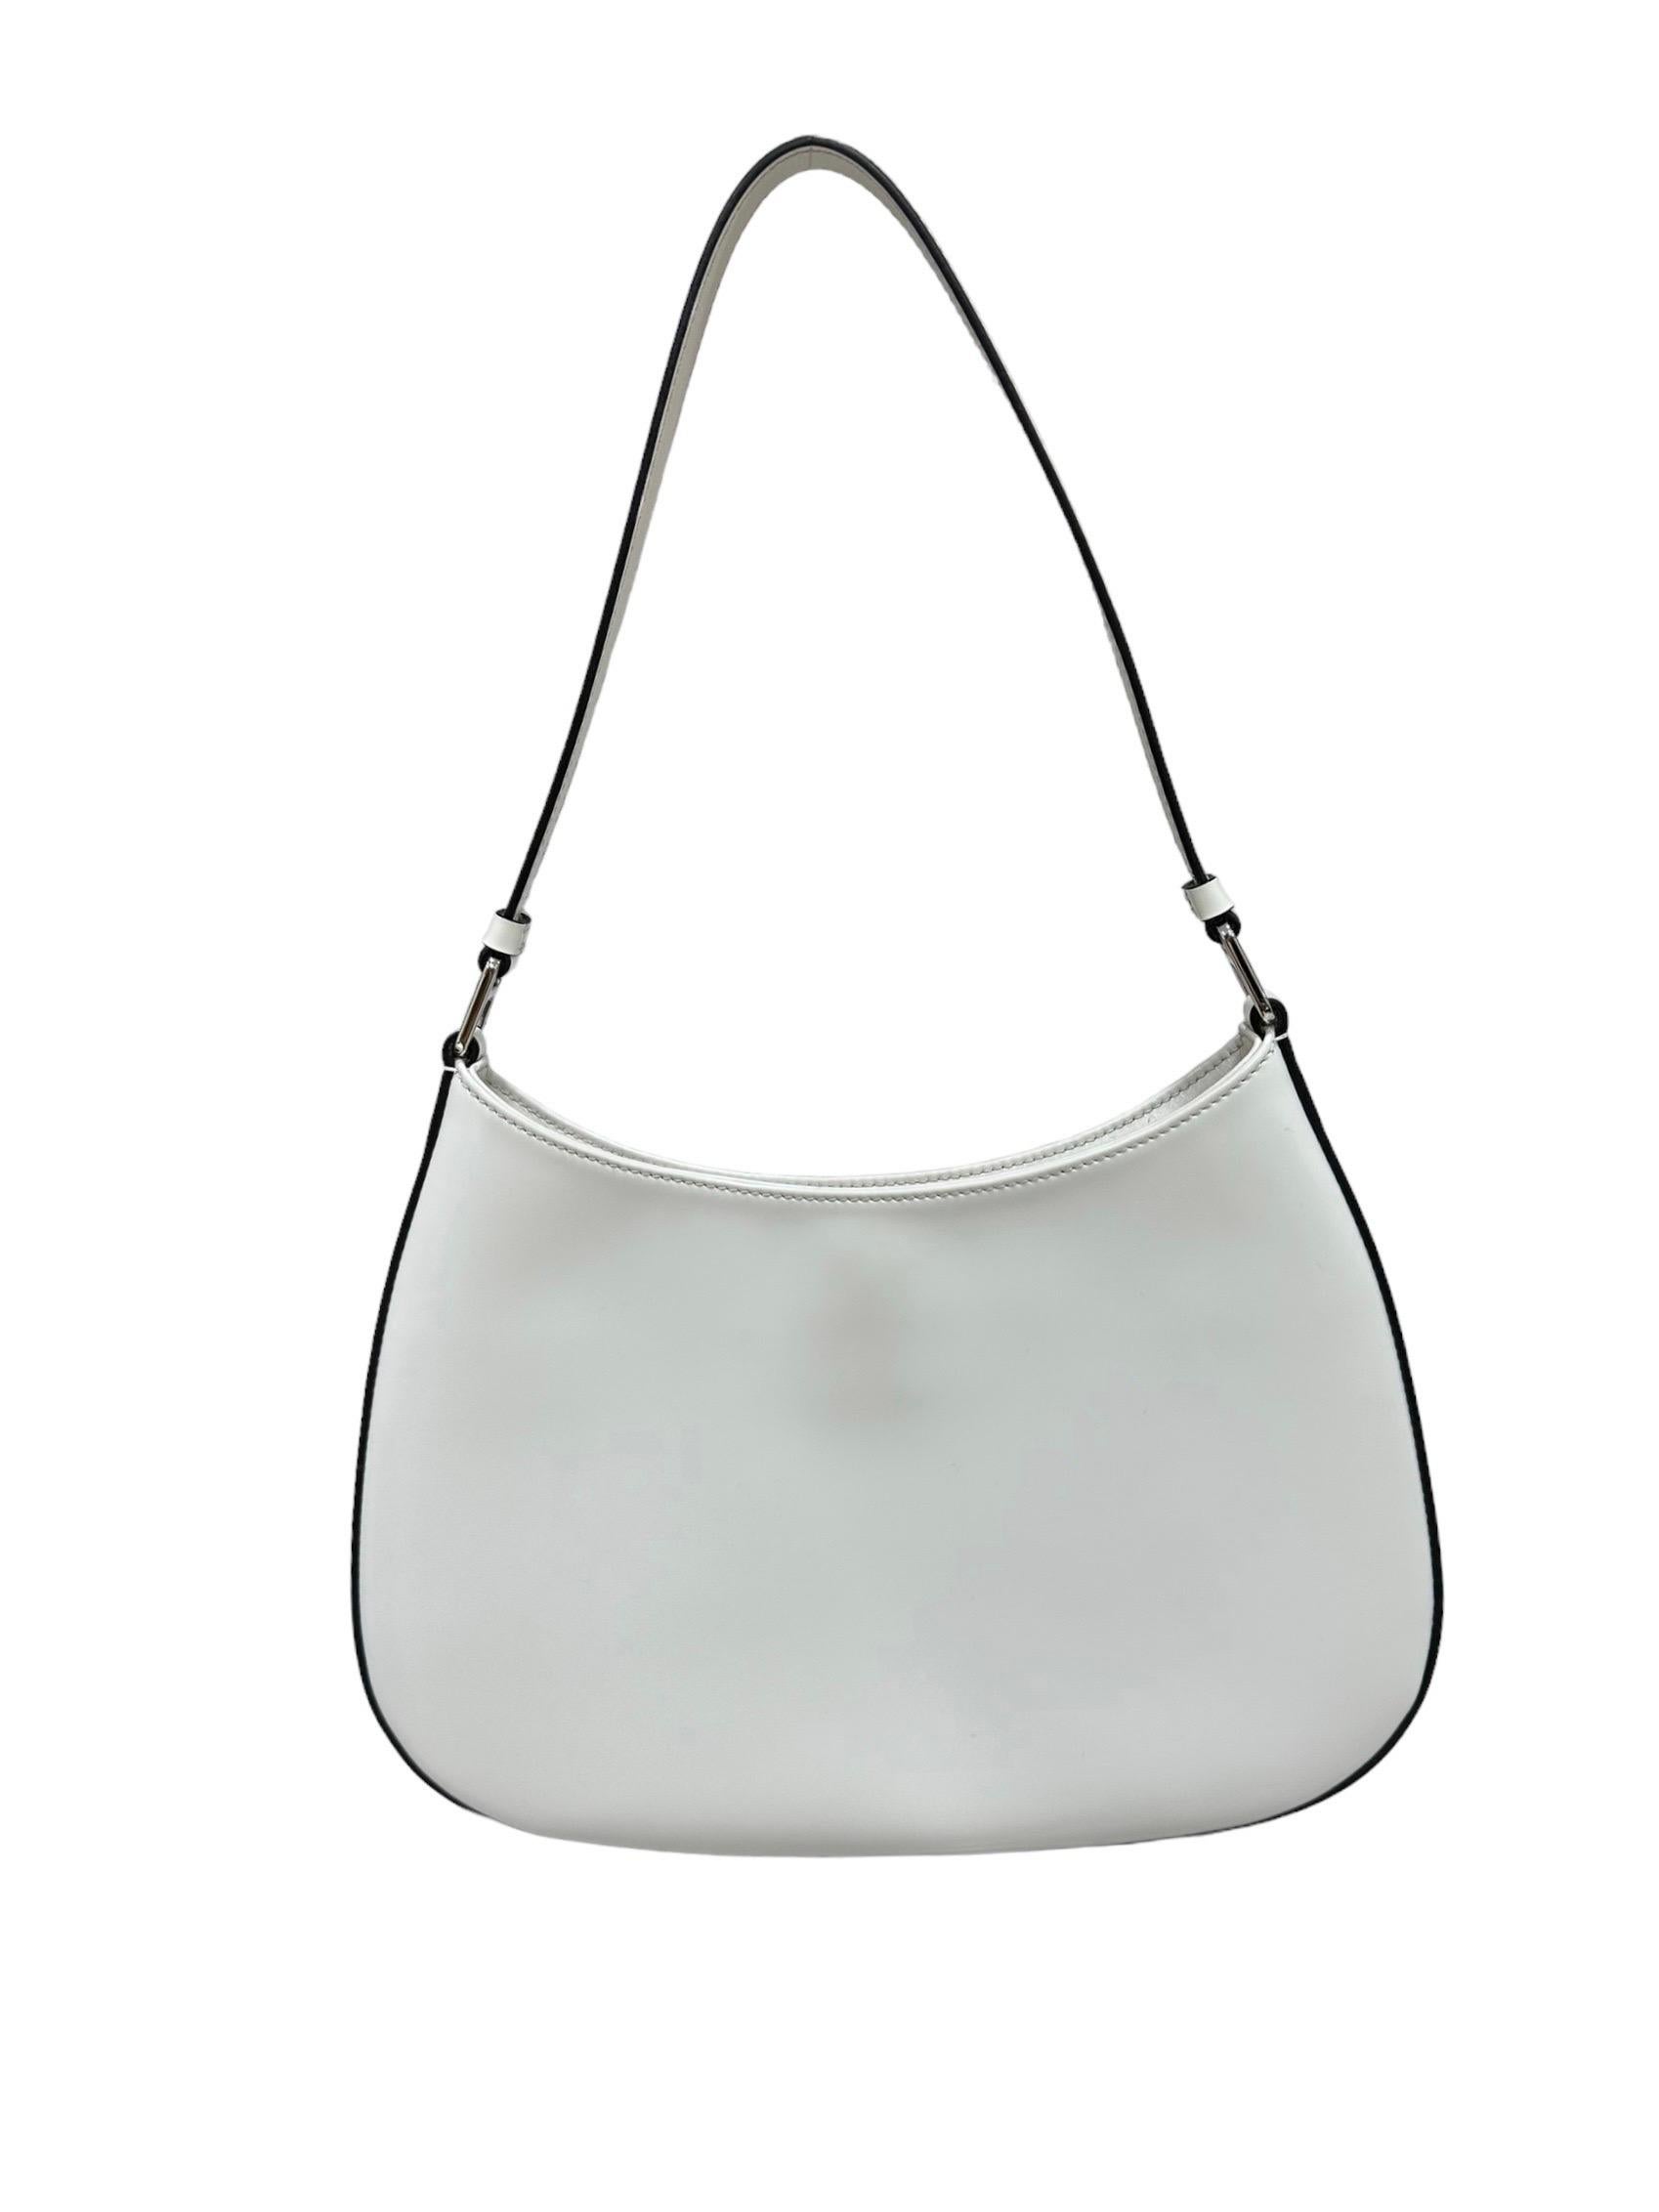 Prada Cleo White Leather Shoulder Bag 2